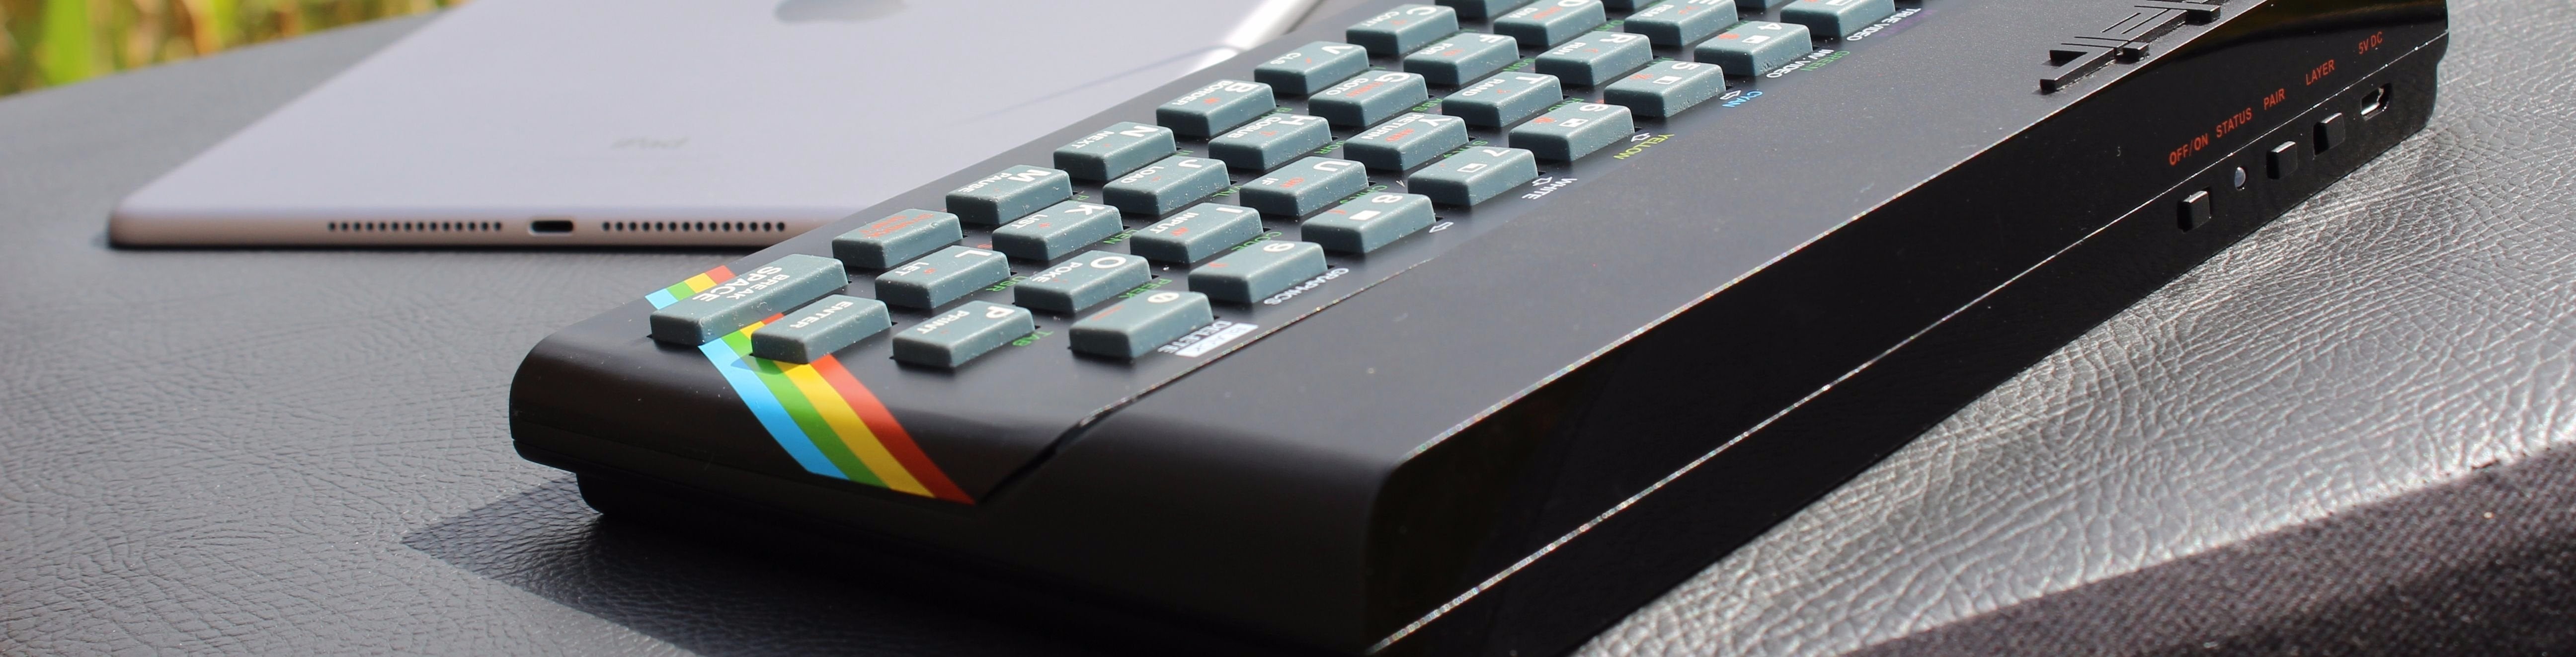 Imagen para Análisis del Sinclair ZX Spectrum Vega